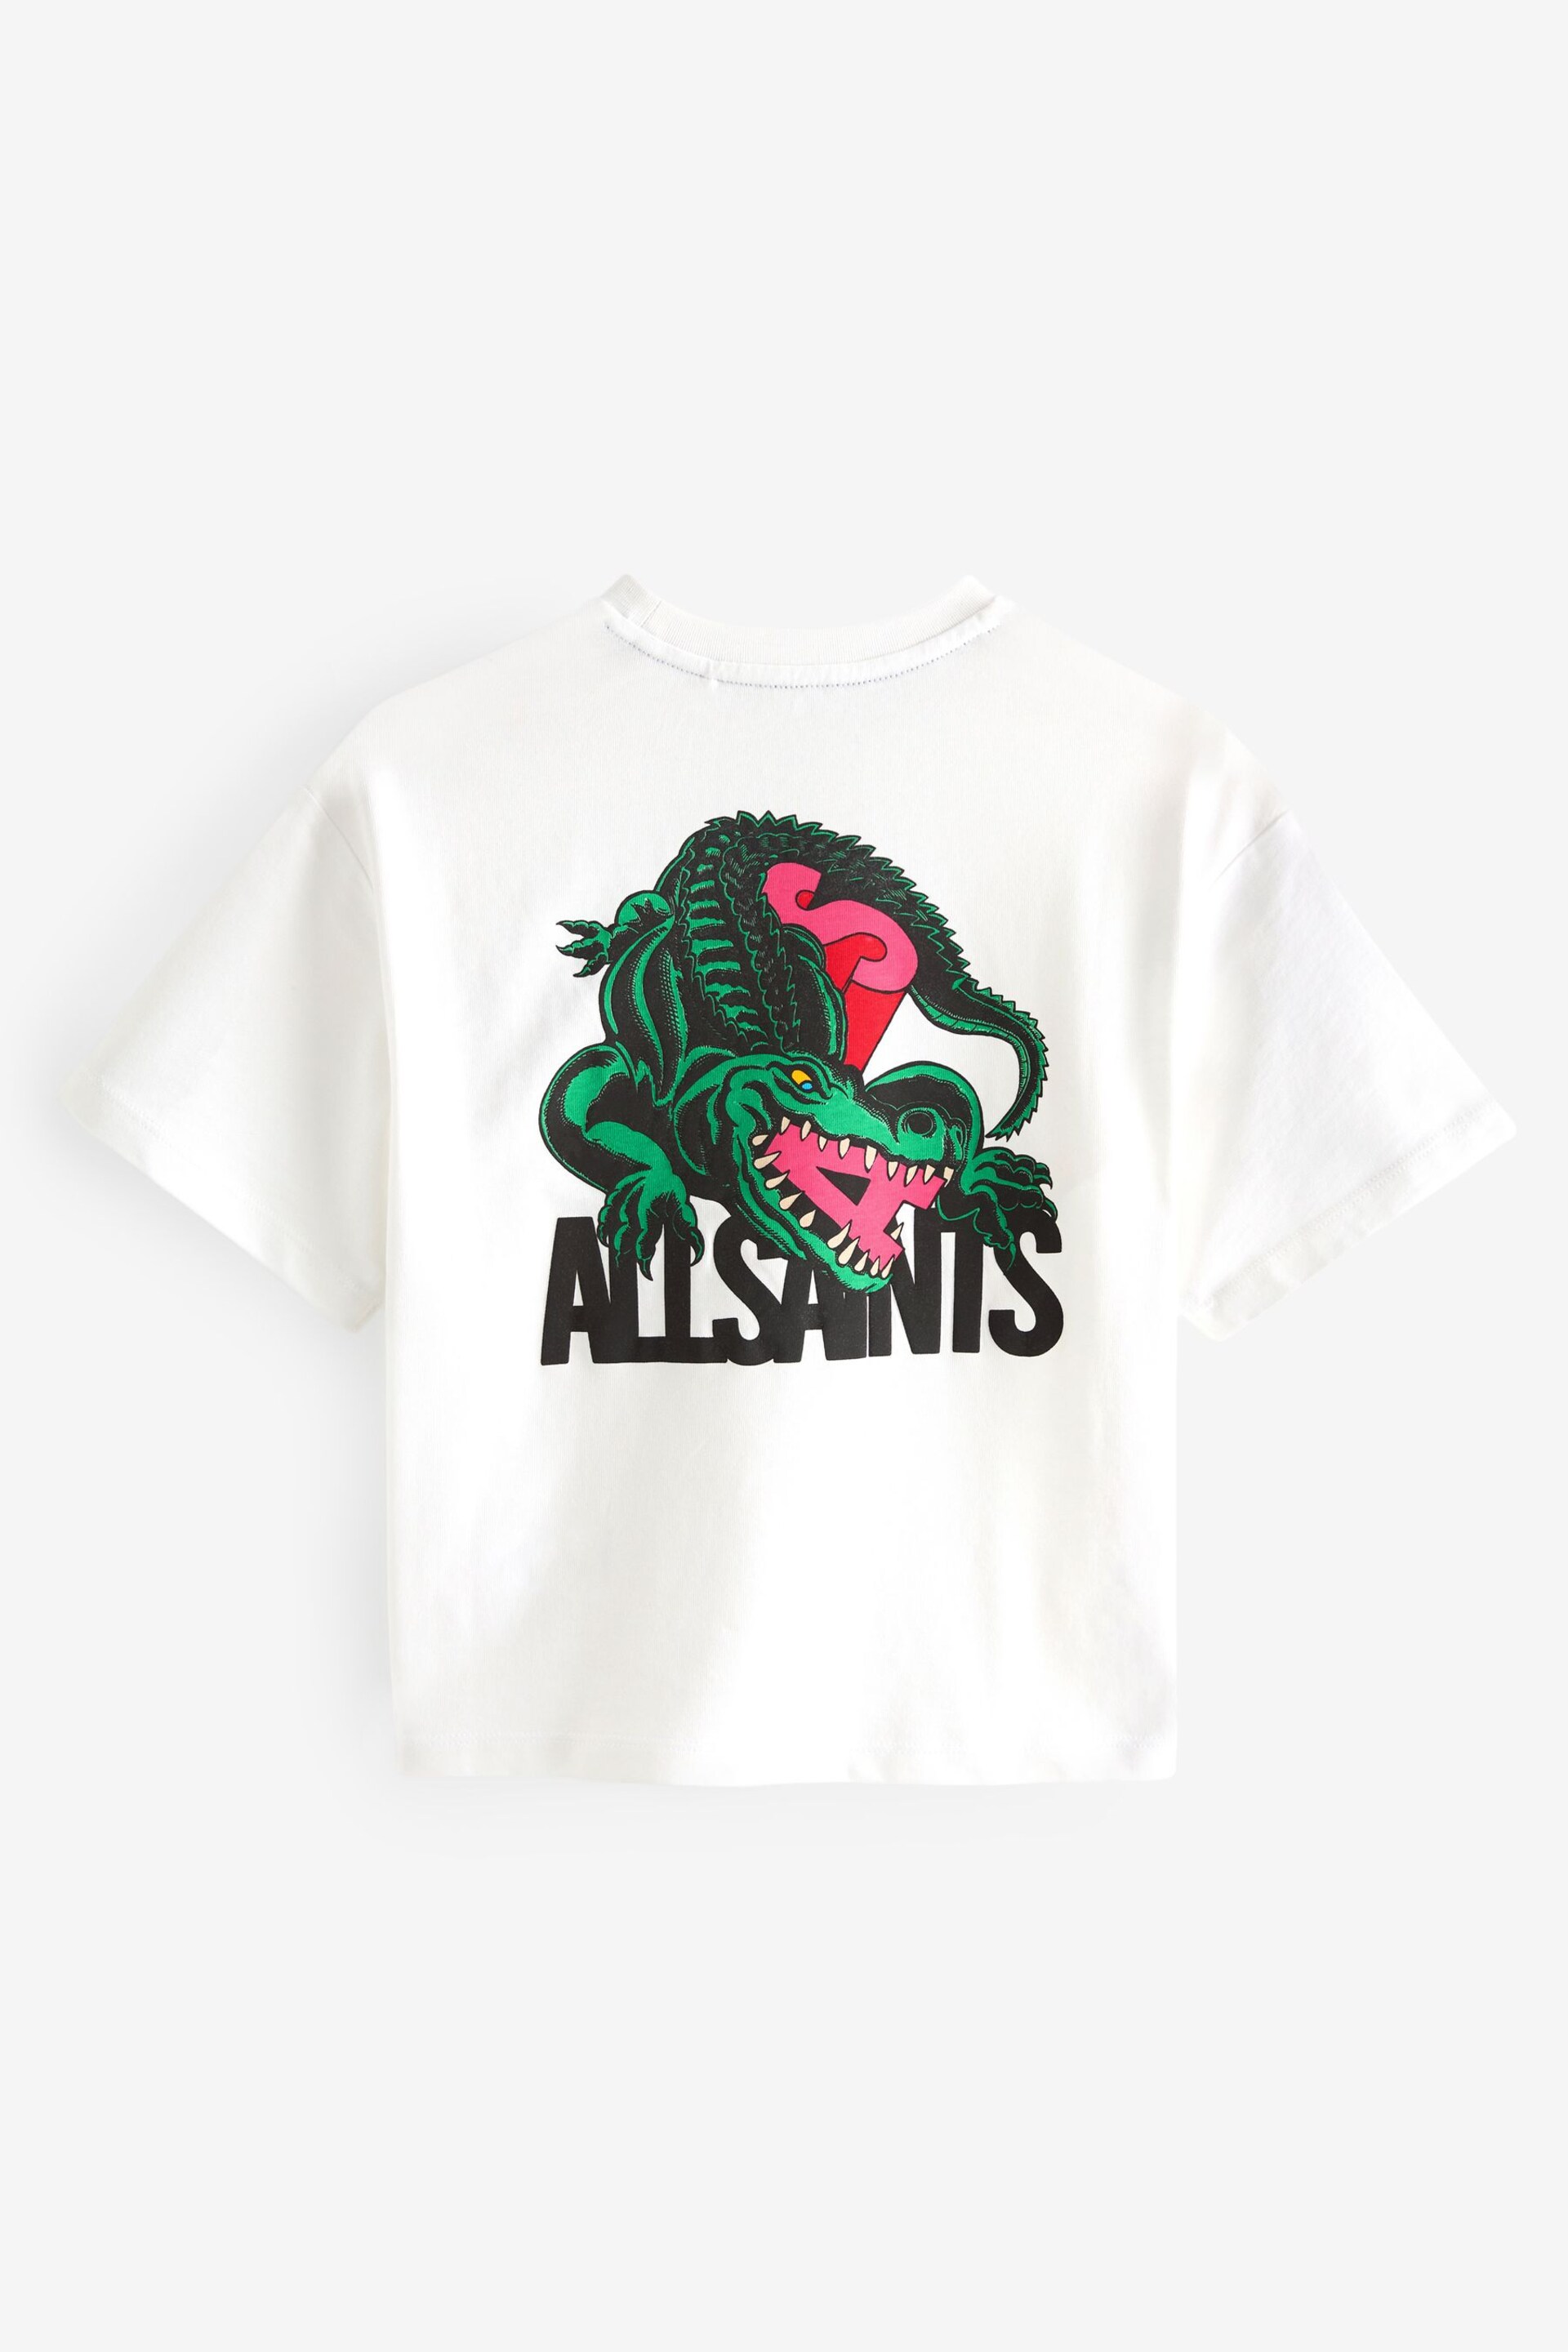 smALLSAINTS White/Gator Boys Graphic Oversized Crew T-Shirt - Image 6 of 8